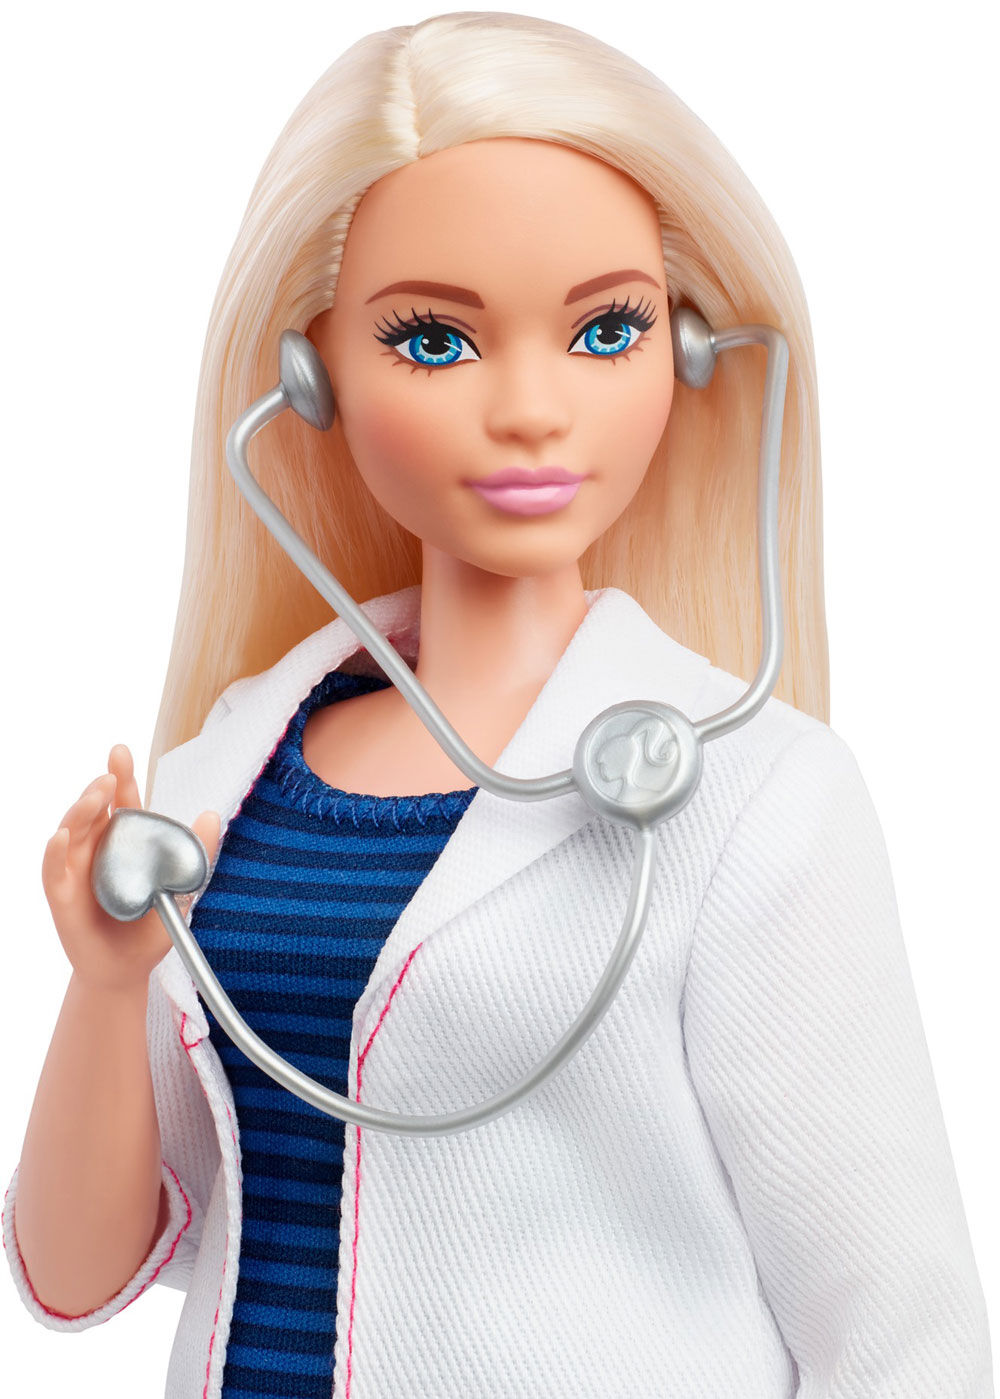 barbie doctor